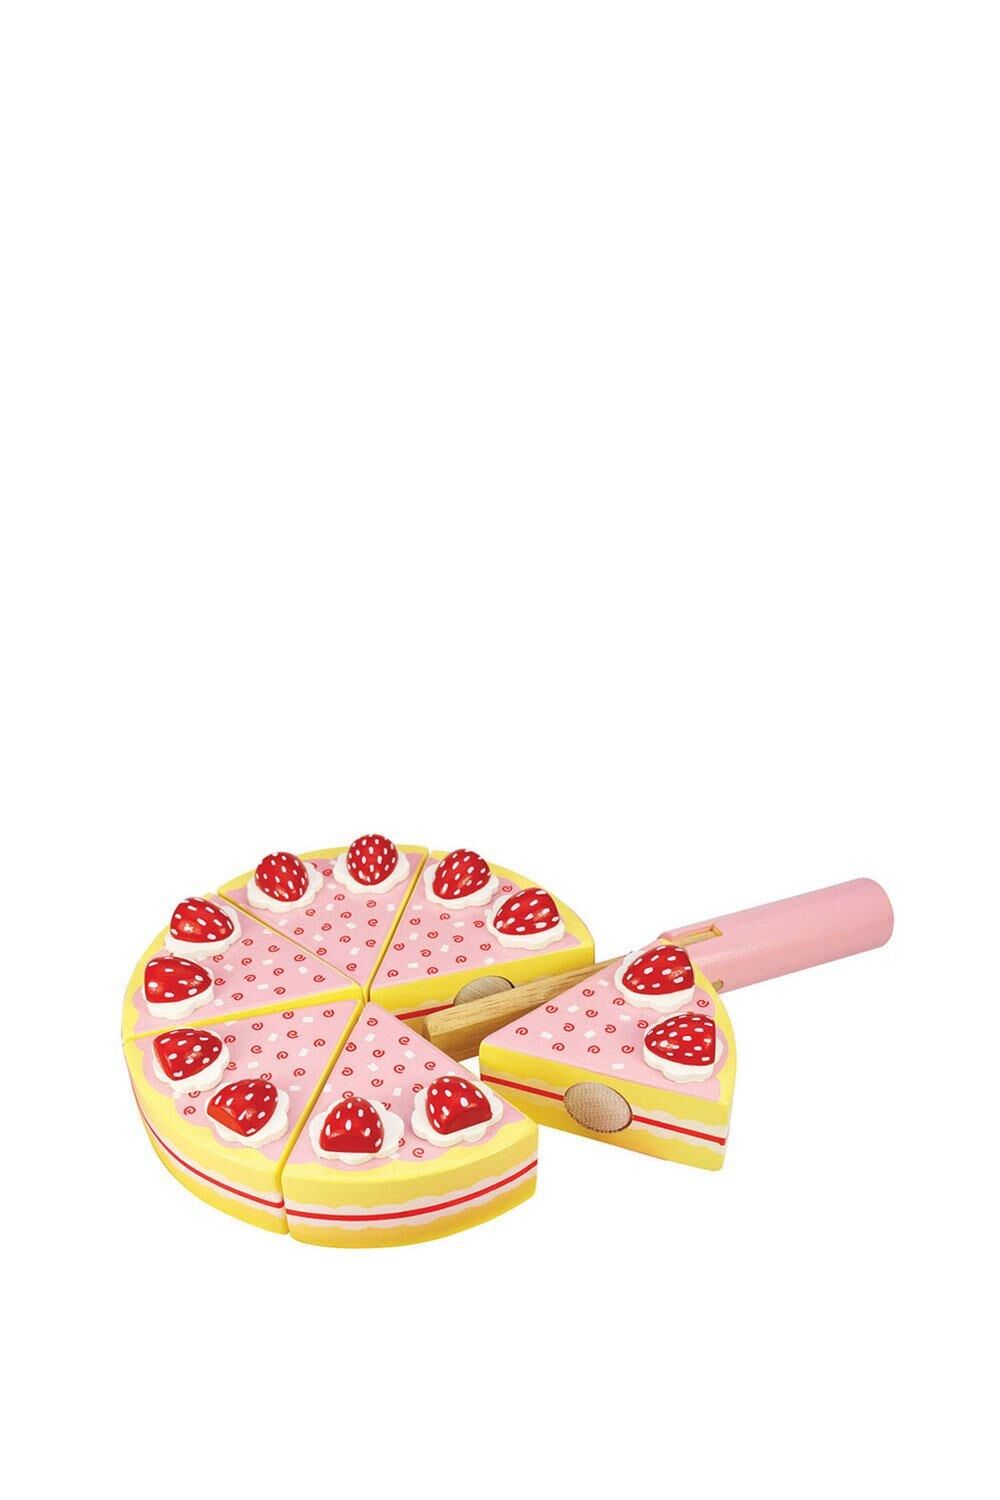 Bigjigs Toys Strawberry Party Cake Toy